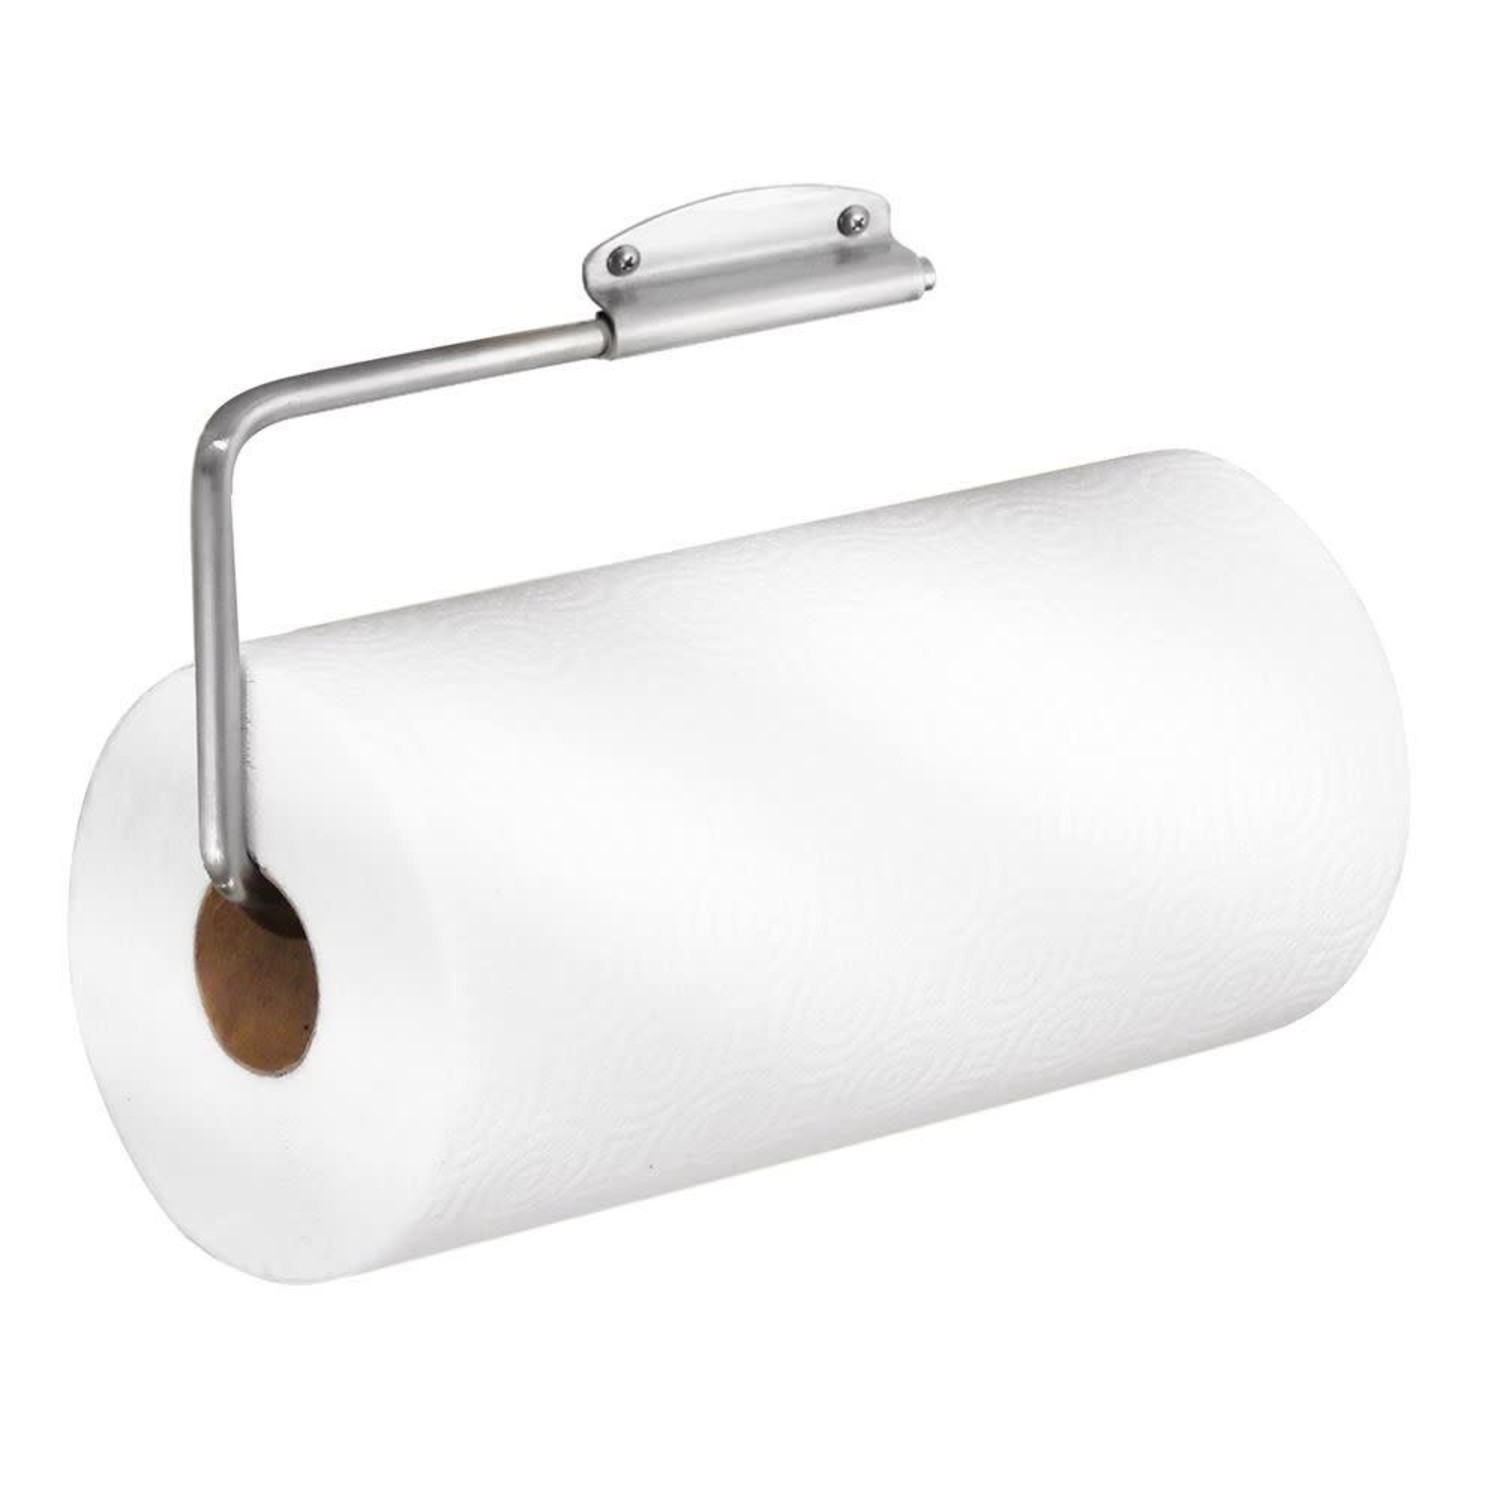 Stainless Steel Paper Towel Holder - Whisk